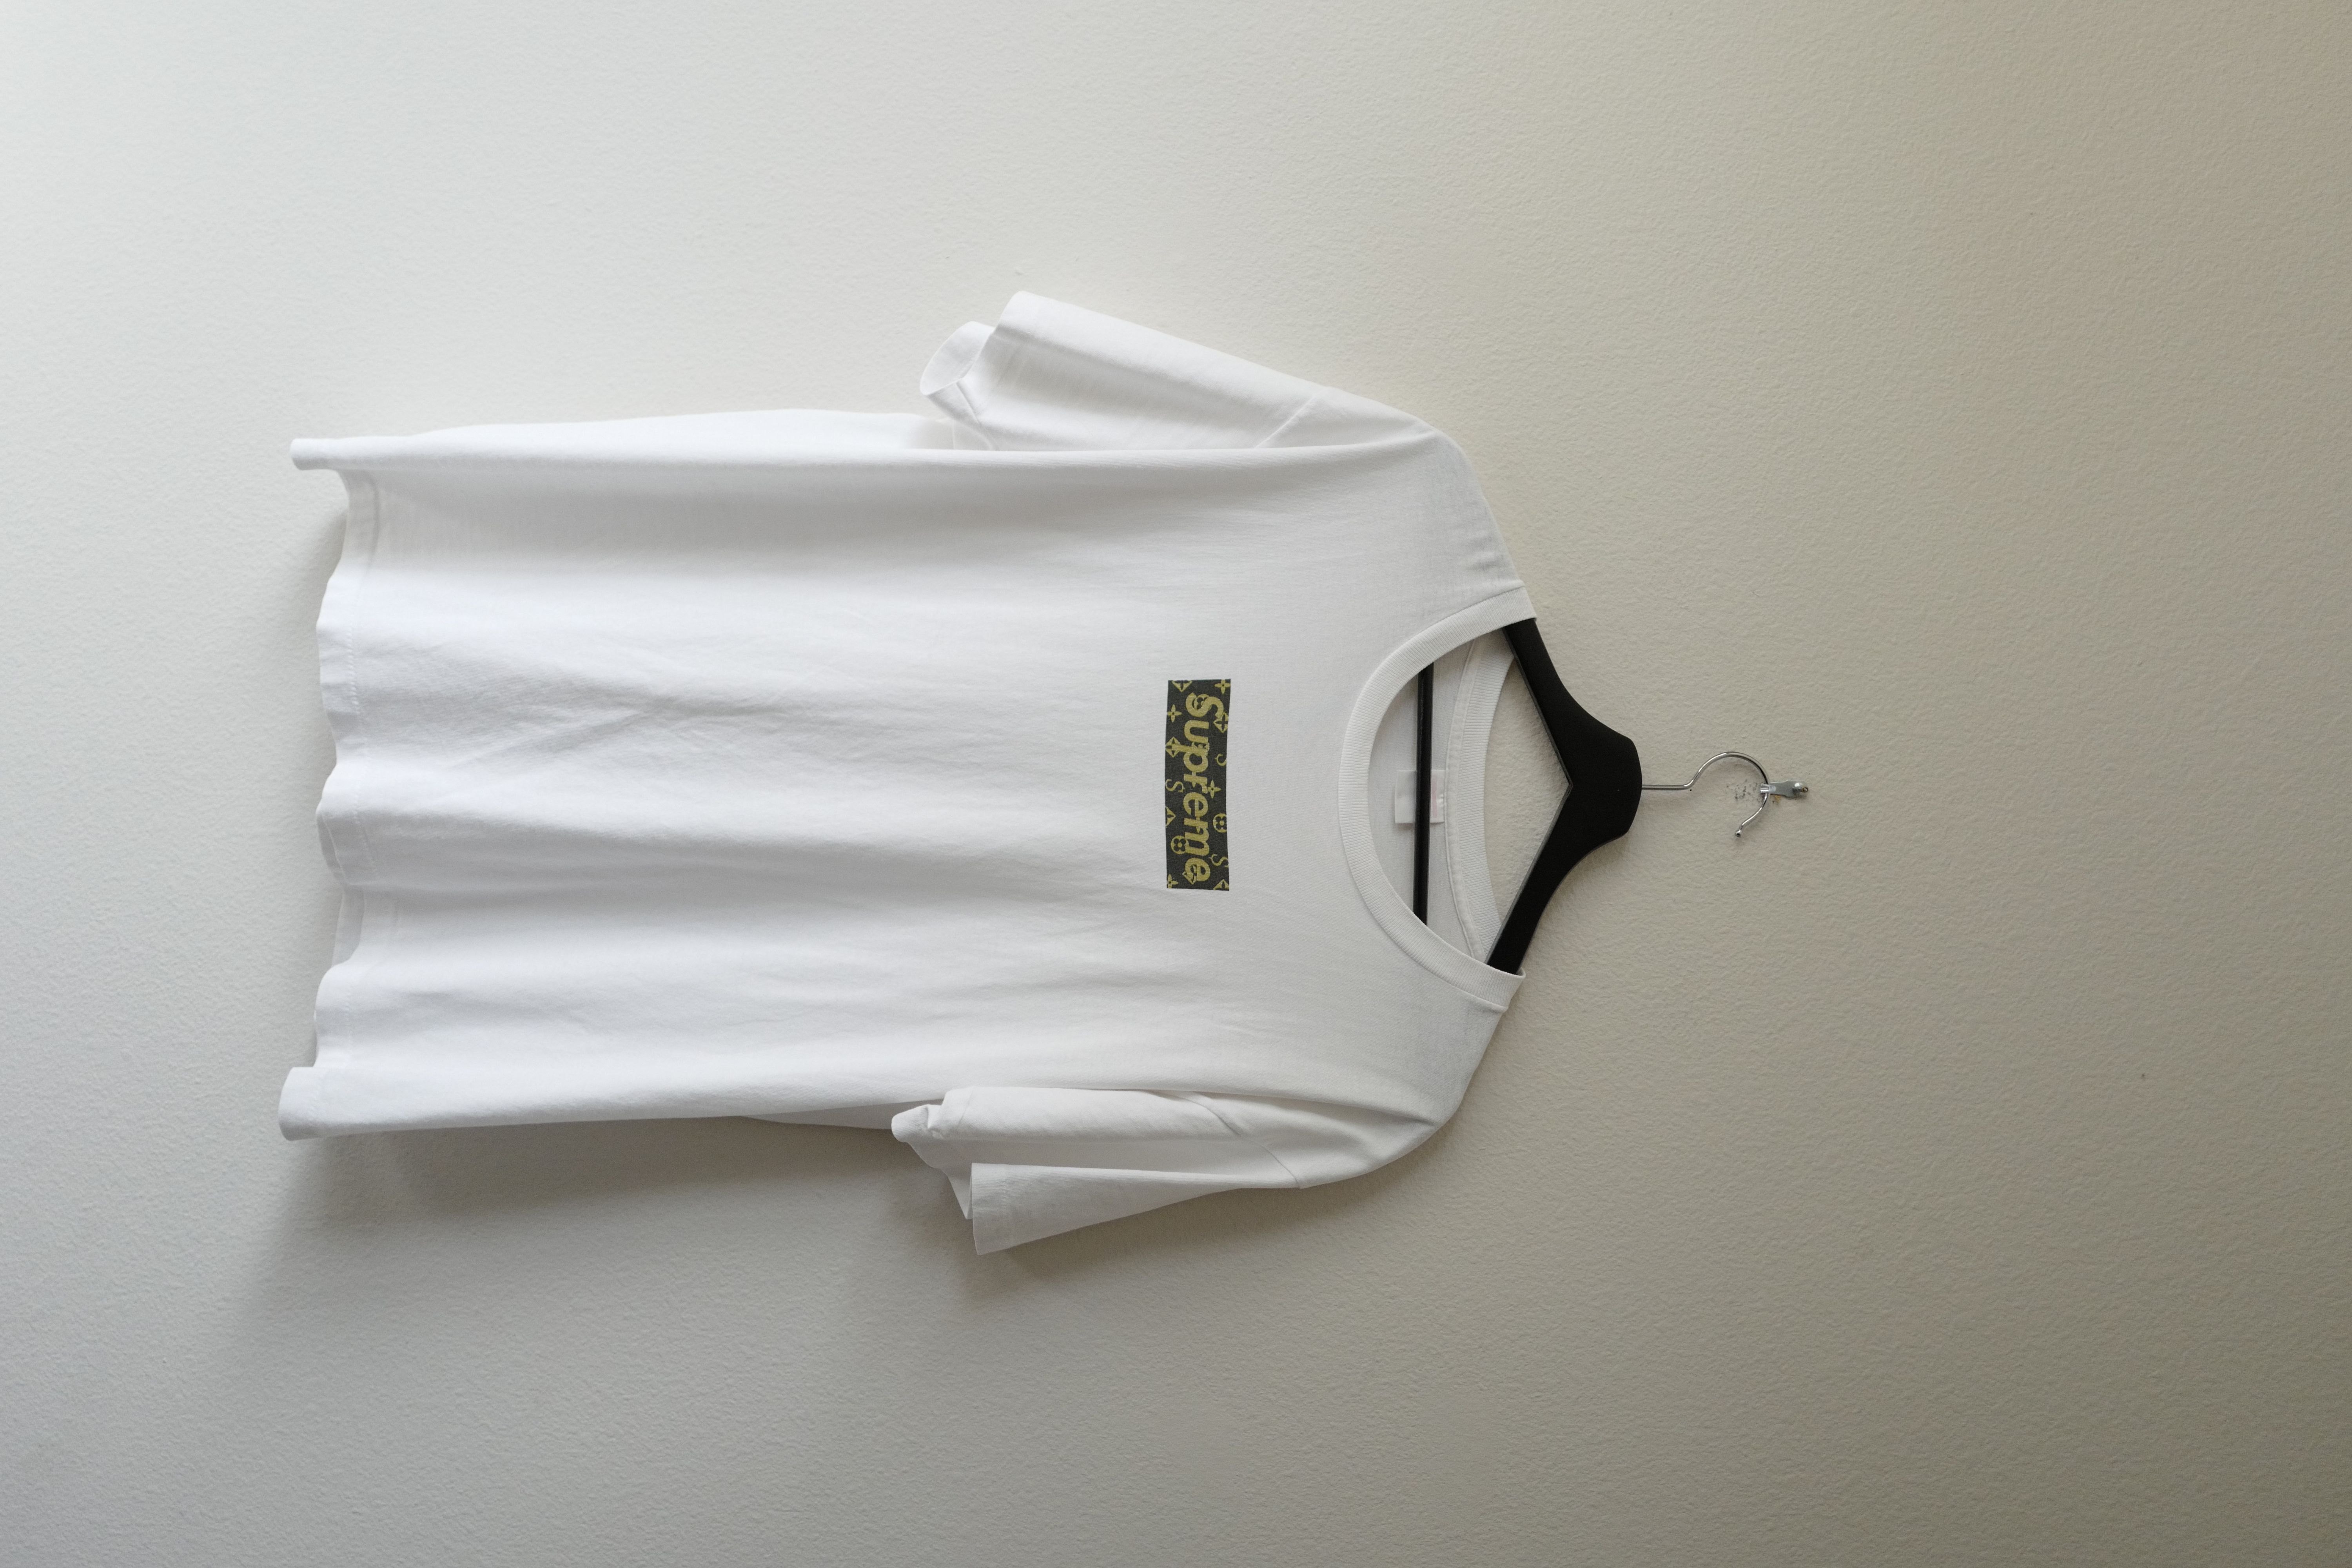 OG 2000 Supreme Louis Vuitton LV Monogram Box Logo T Shirt 100% Authentic  VTG